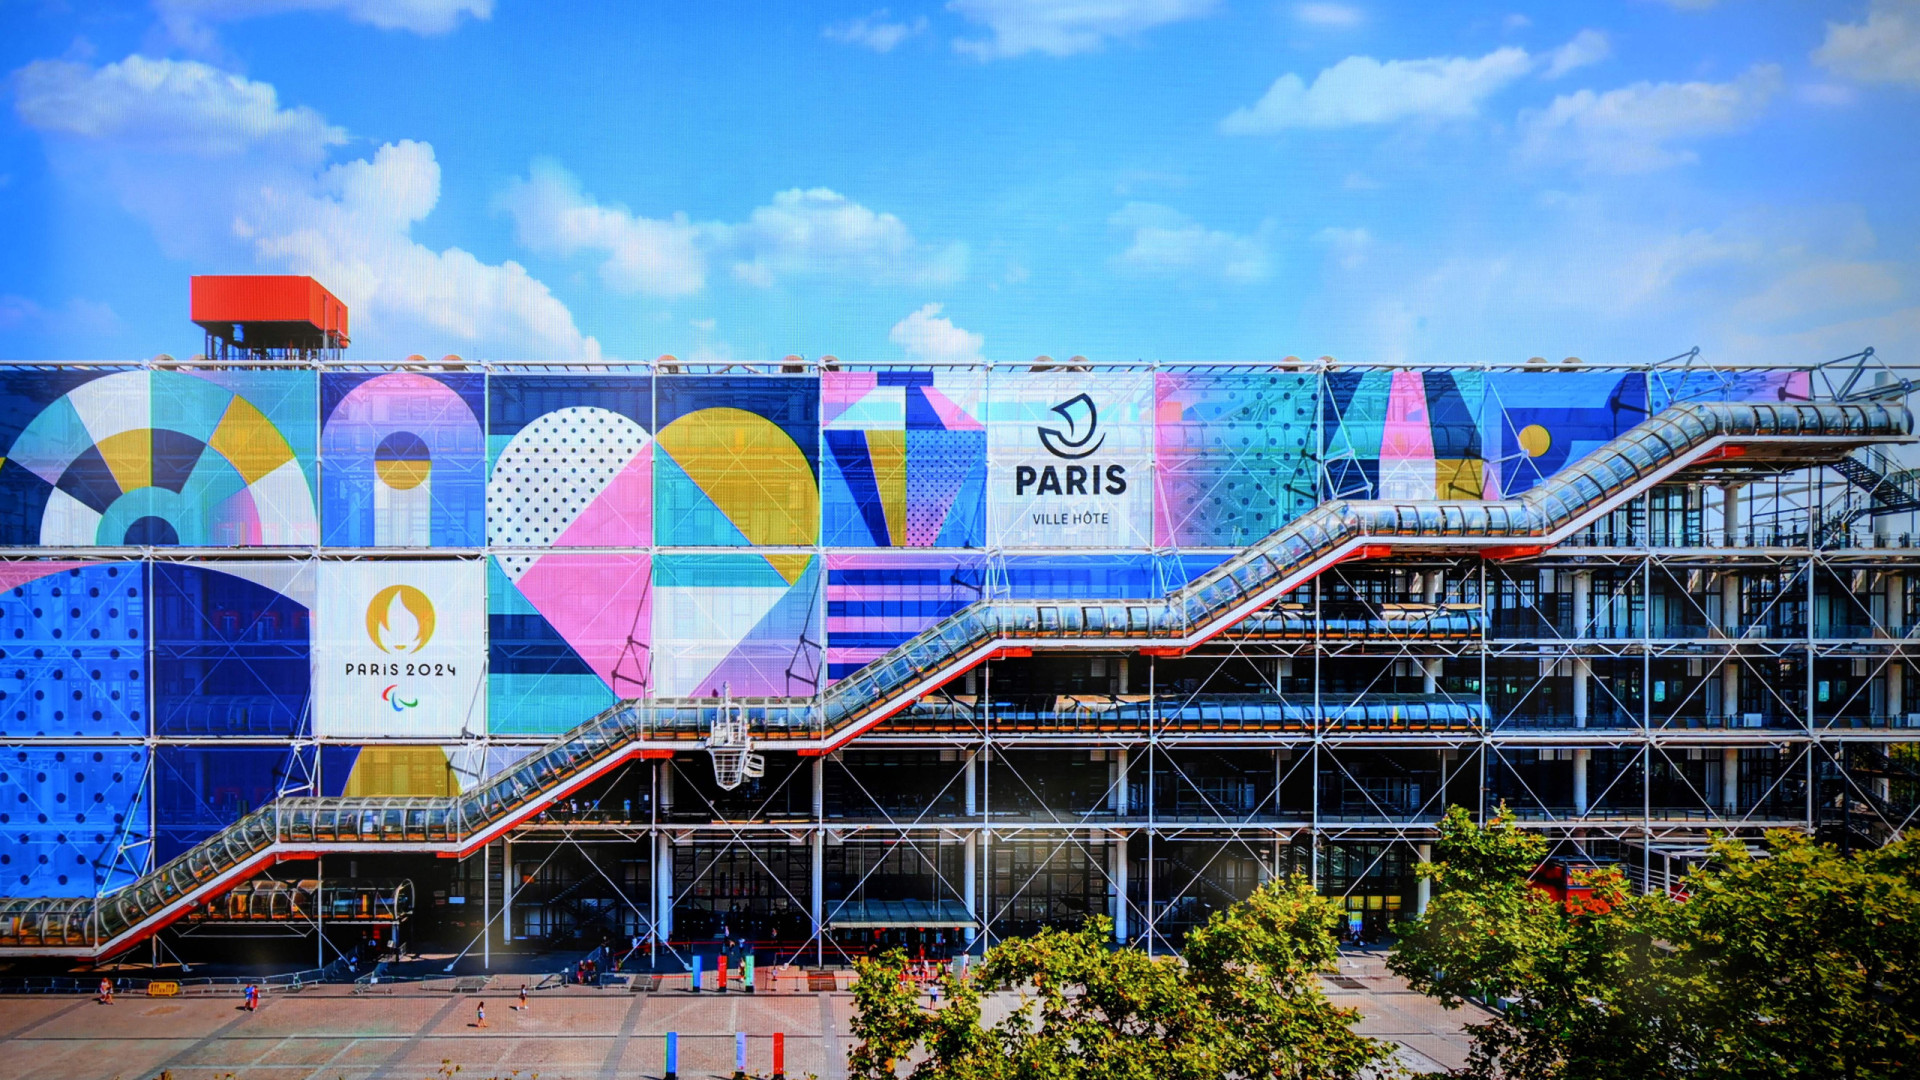 Paris-2024 revela identidade visual e pictogramas da Olimpíada e Paralimpíada